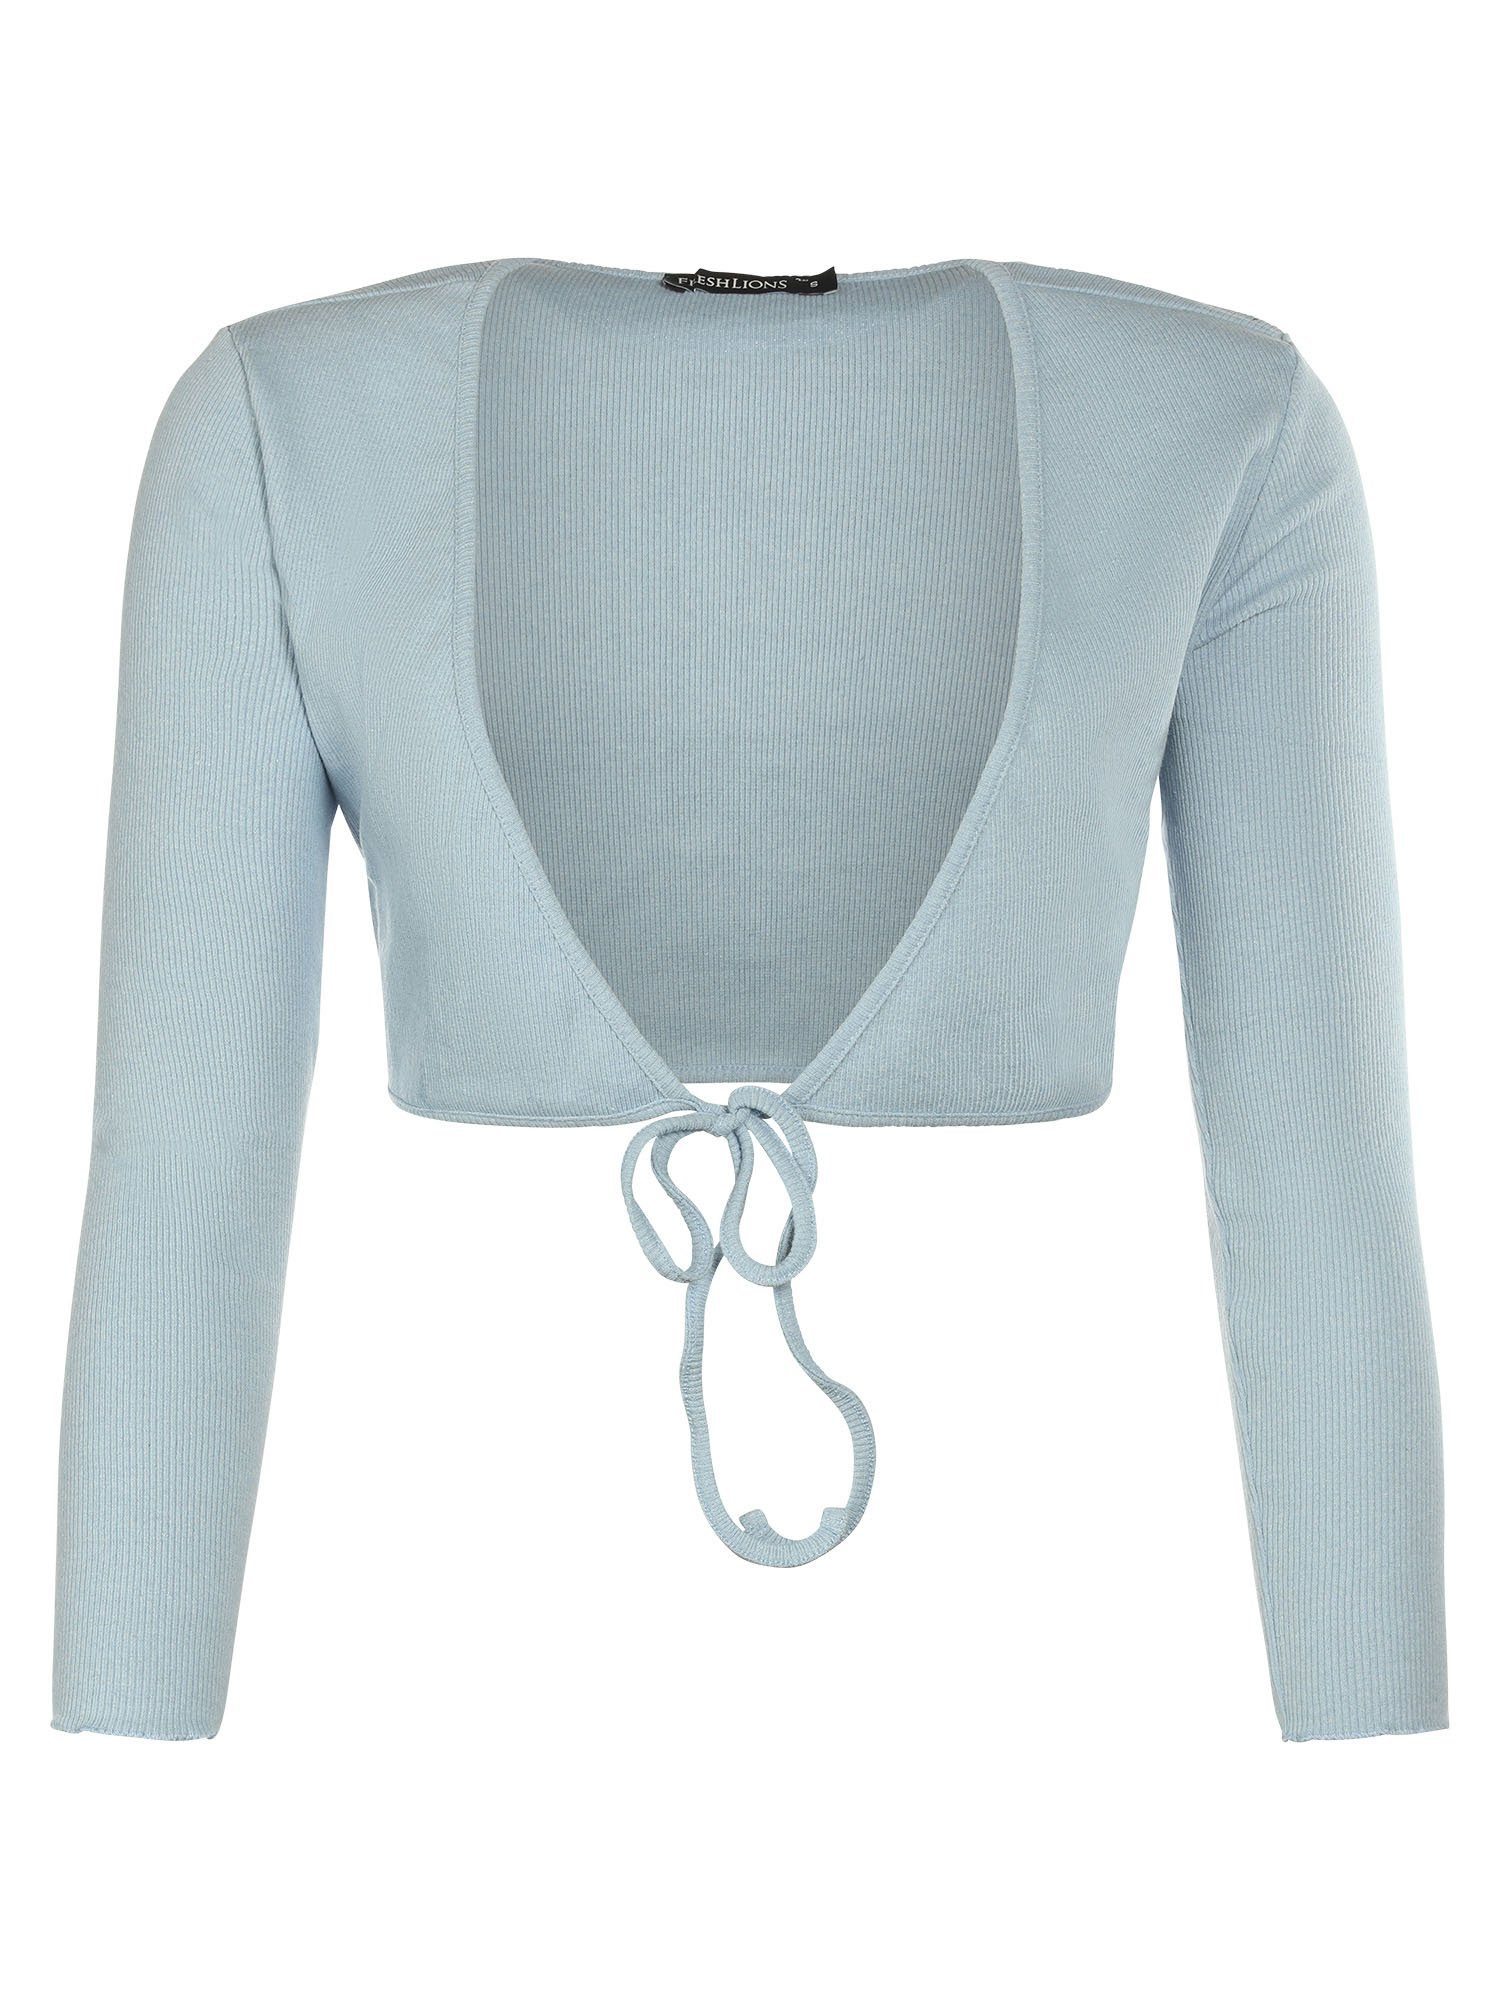 Wickel-Design 'Gigi' Top mit Langarmbluse Freshlions Blau Bindegurt